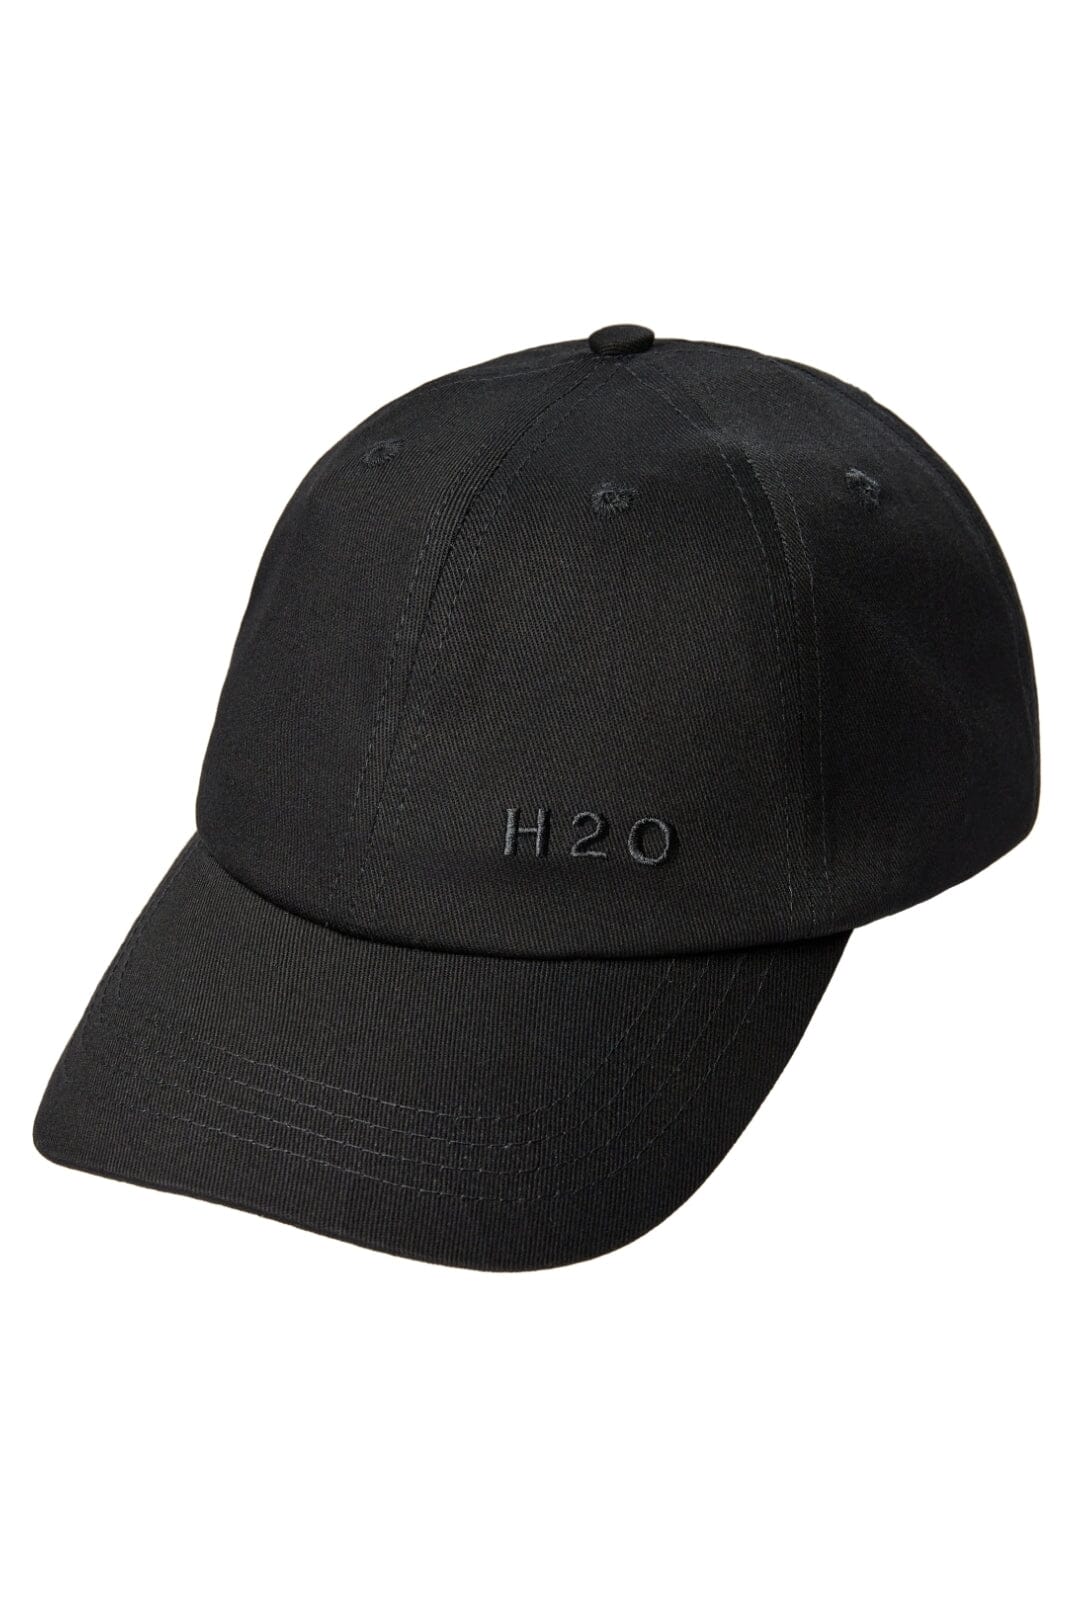 H2O - Happy Cap - 3500 Black Hatte 